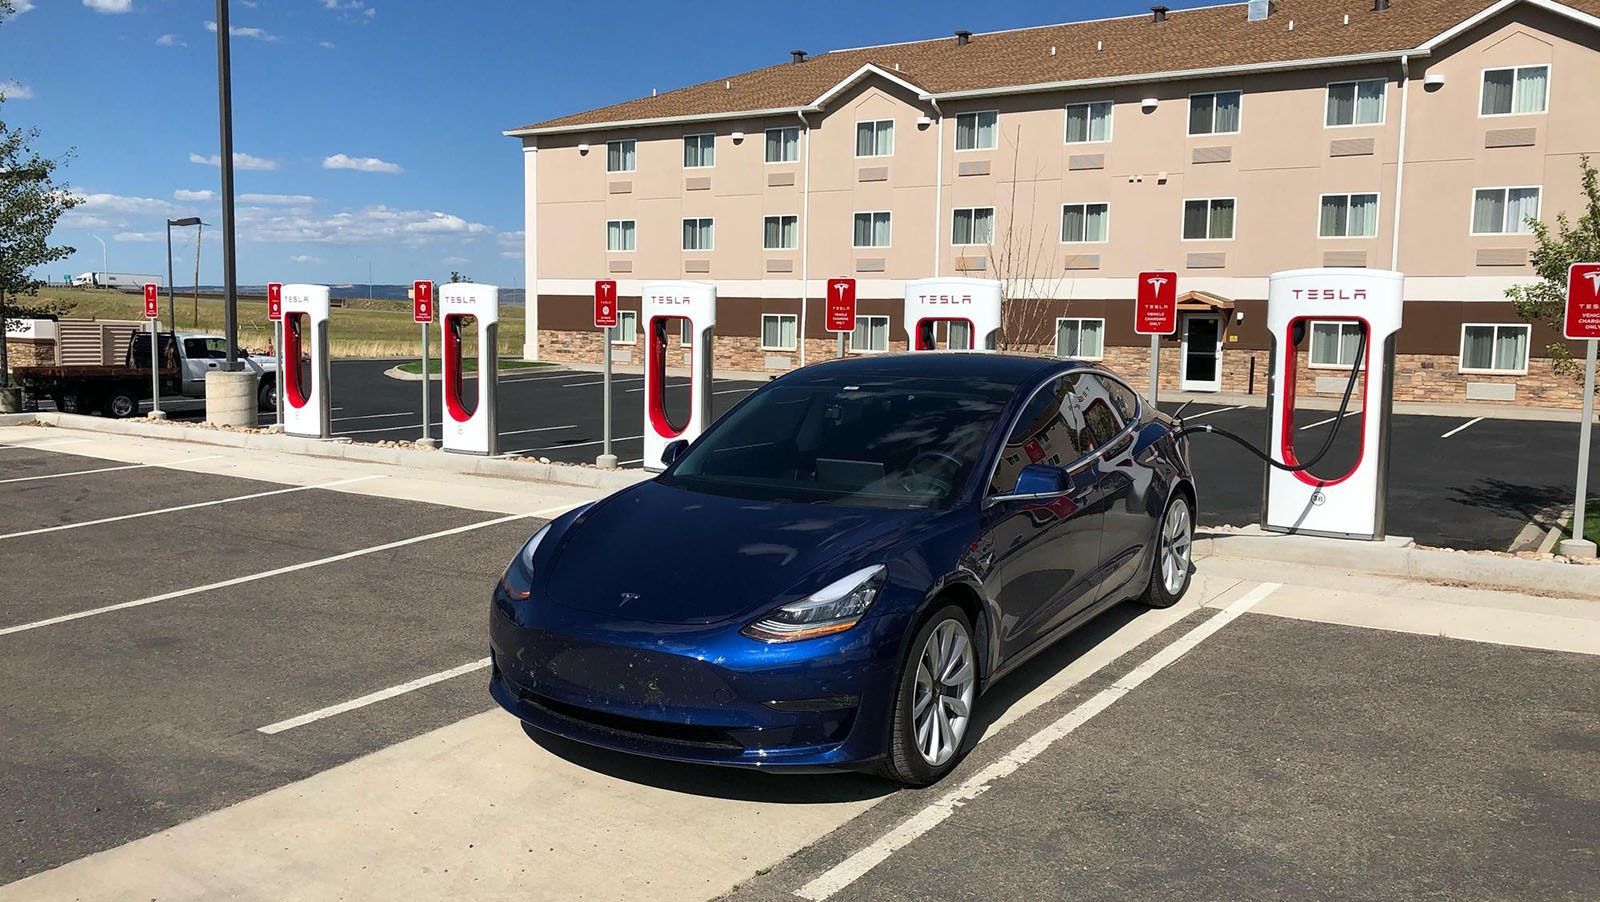 A Tesla Supercharger station in Laramie.